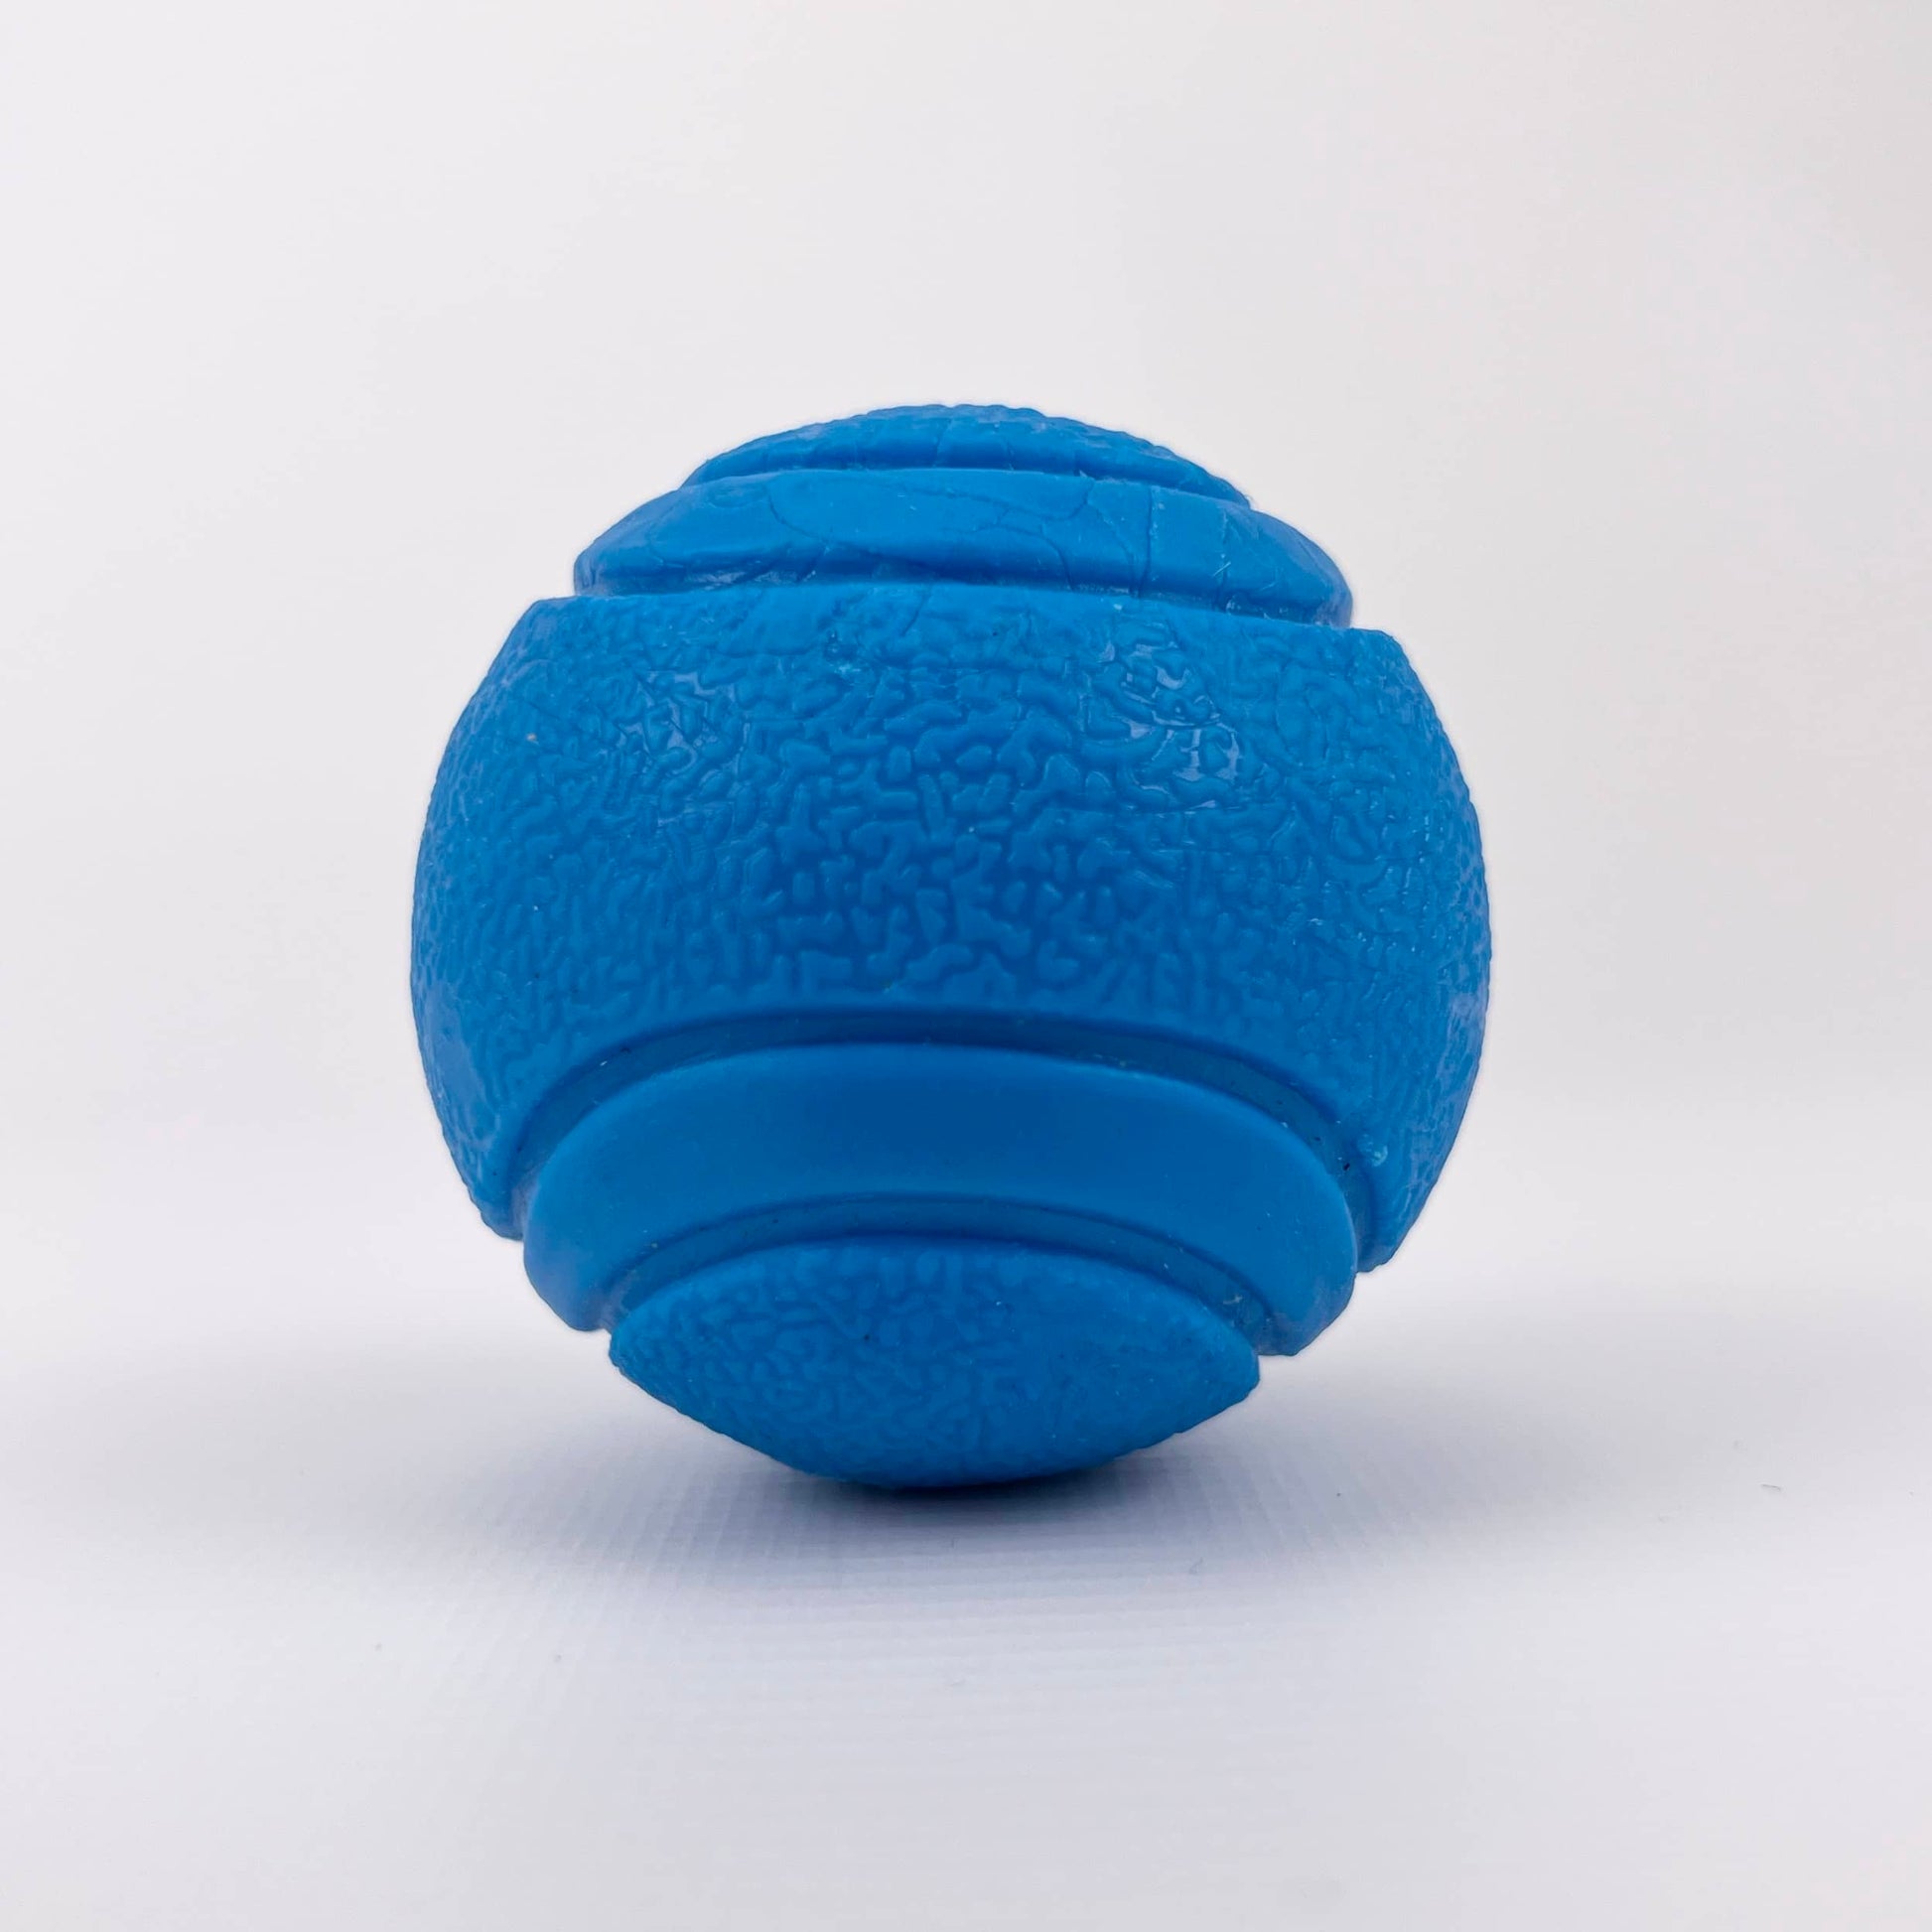 Small Blue Rubber Ball 